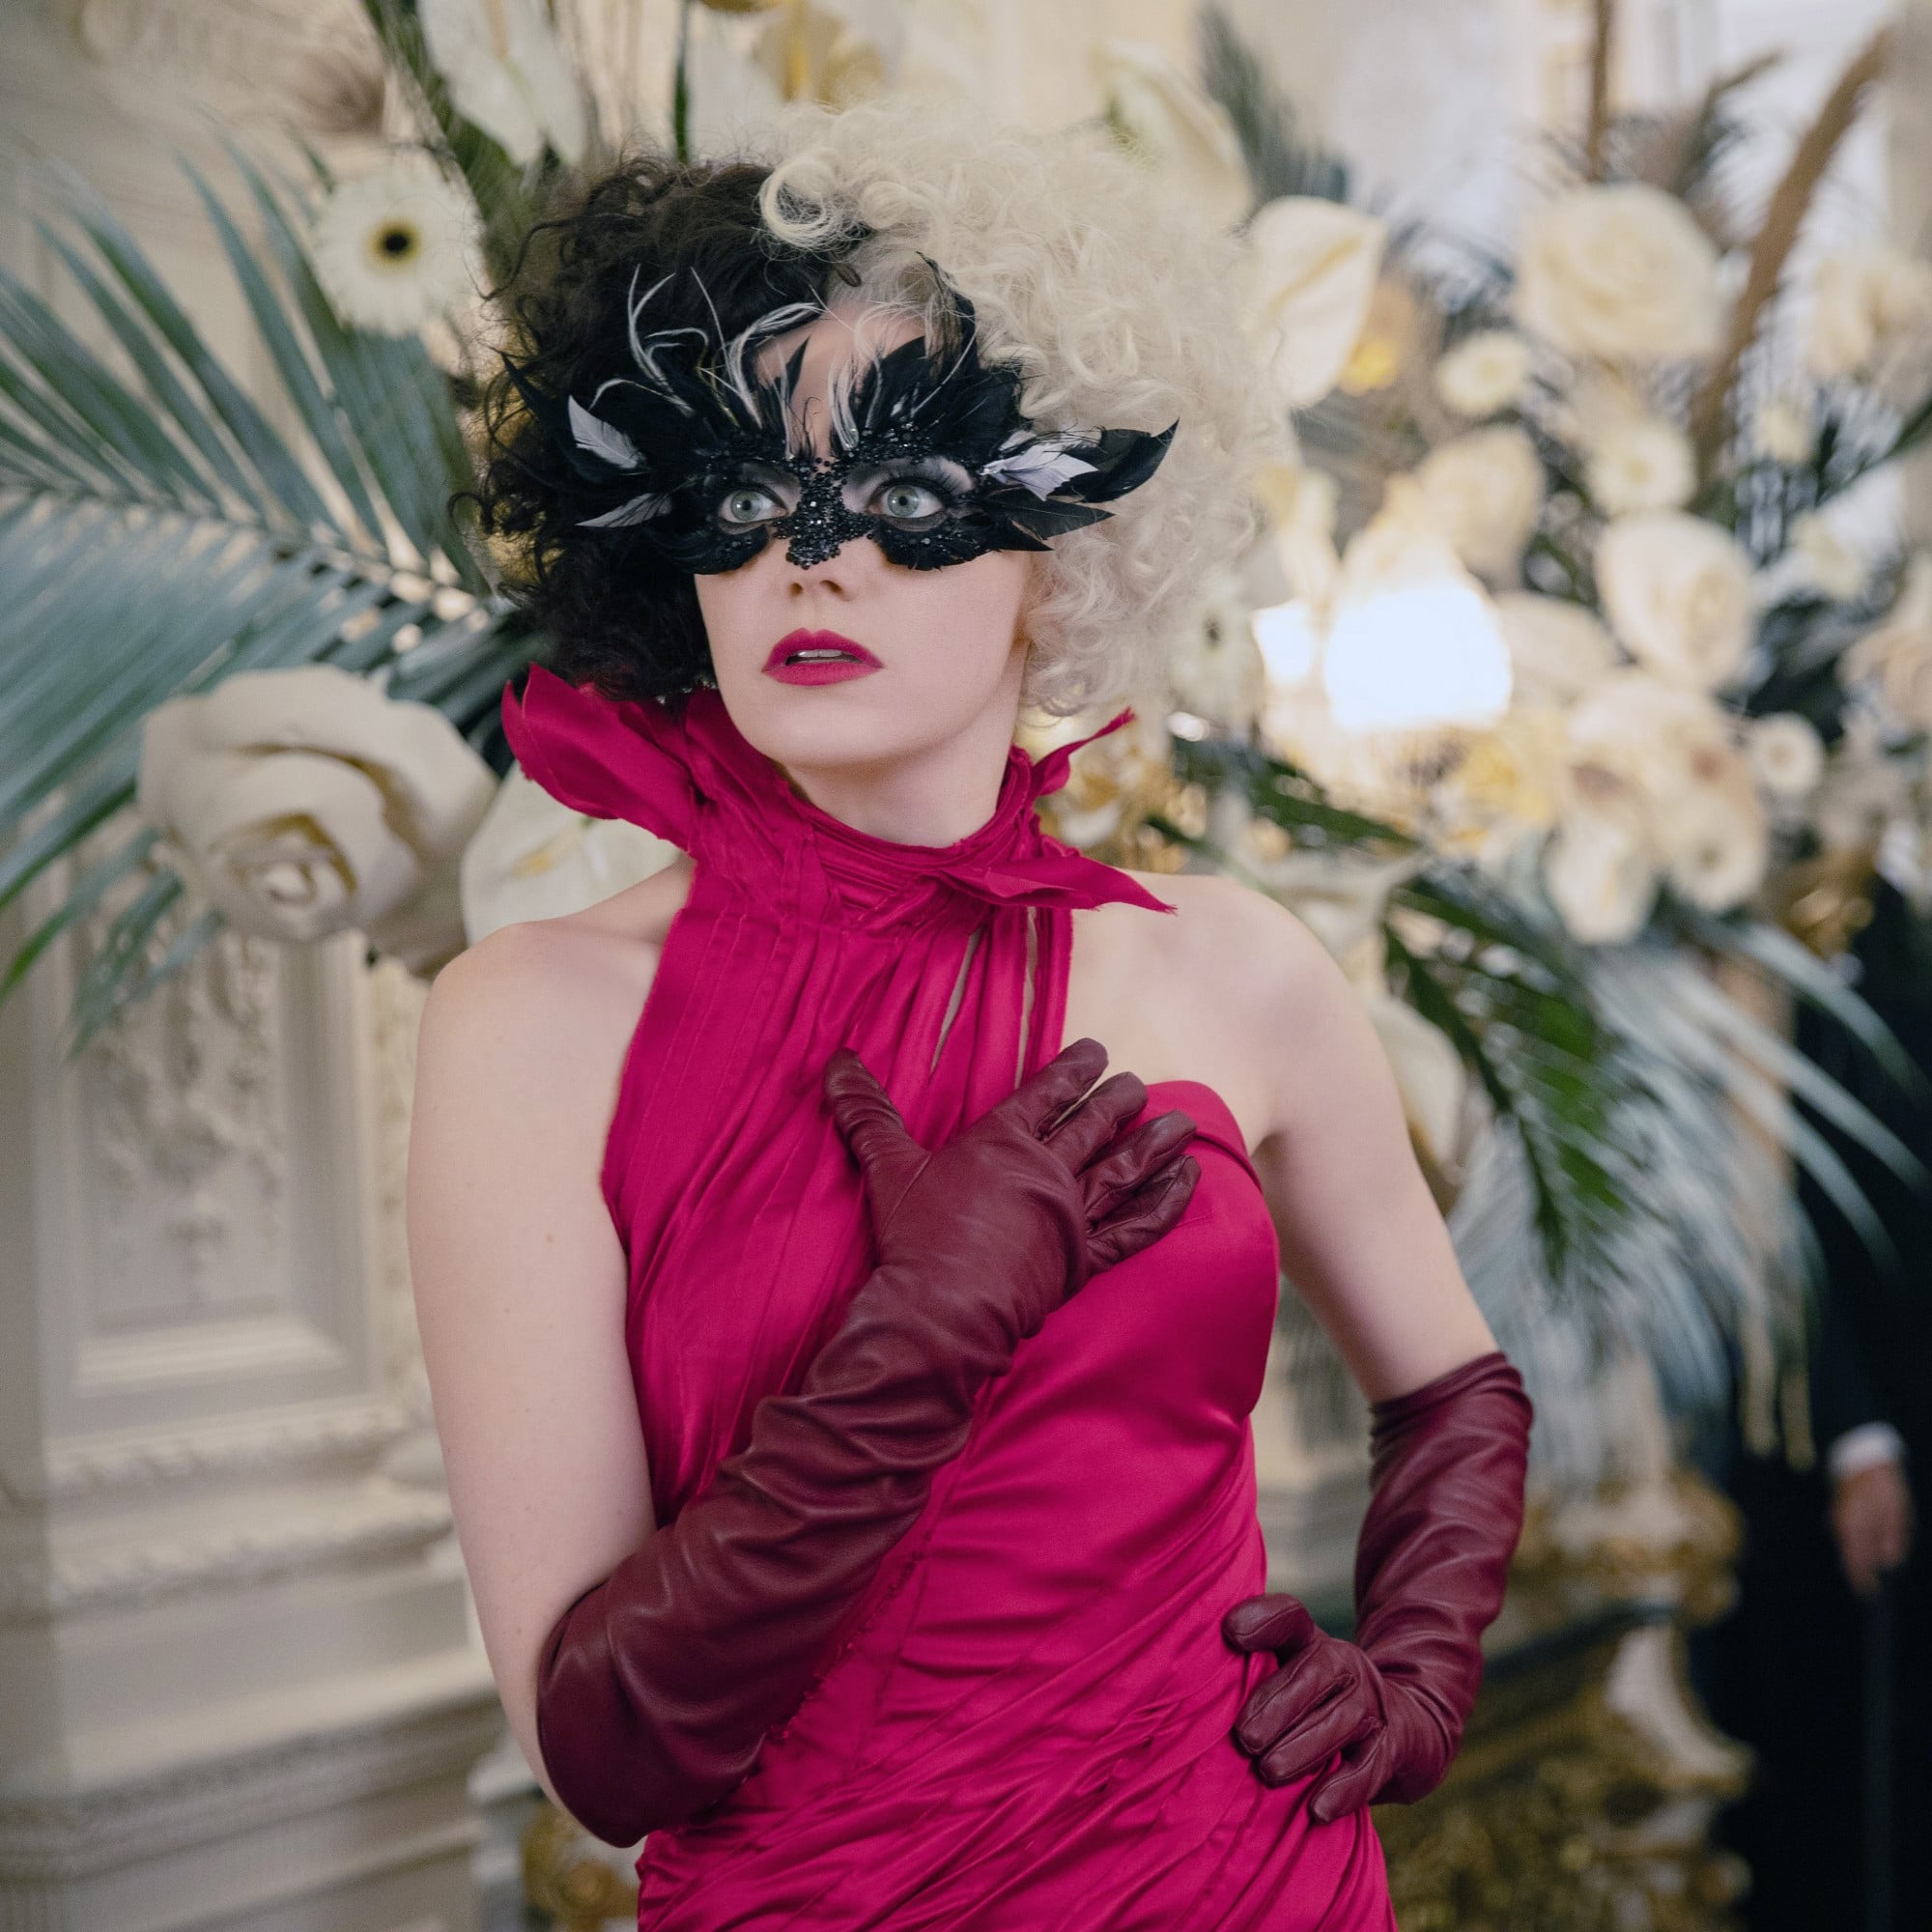 Lady Gaga Costume Adult Outfit Diva Pop Star Halloween Fancy Dress 